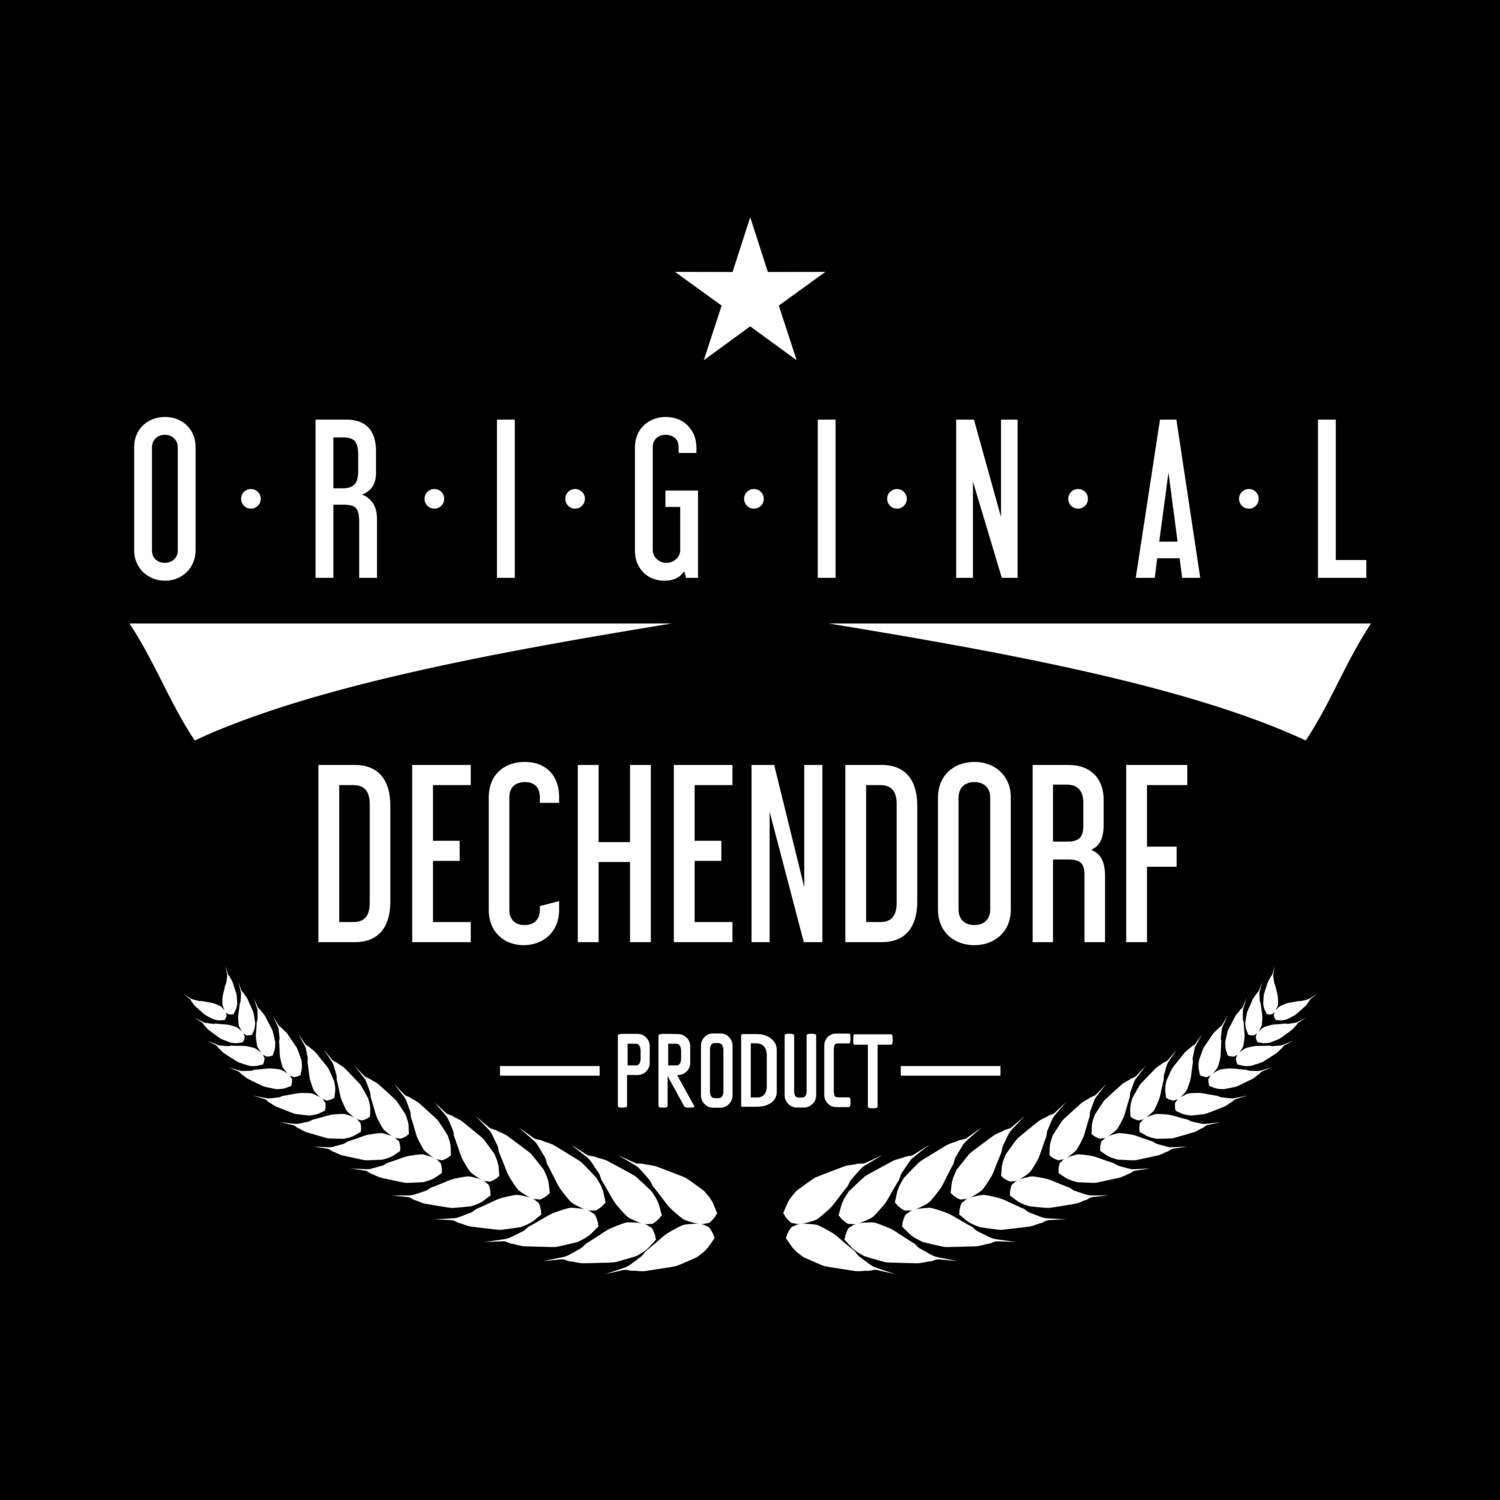 Dechendorf T-Shirt »Original Product«